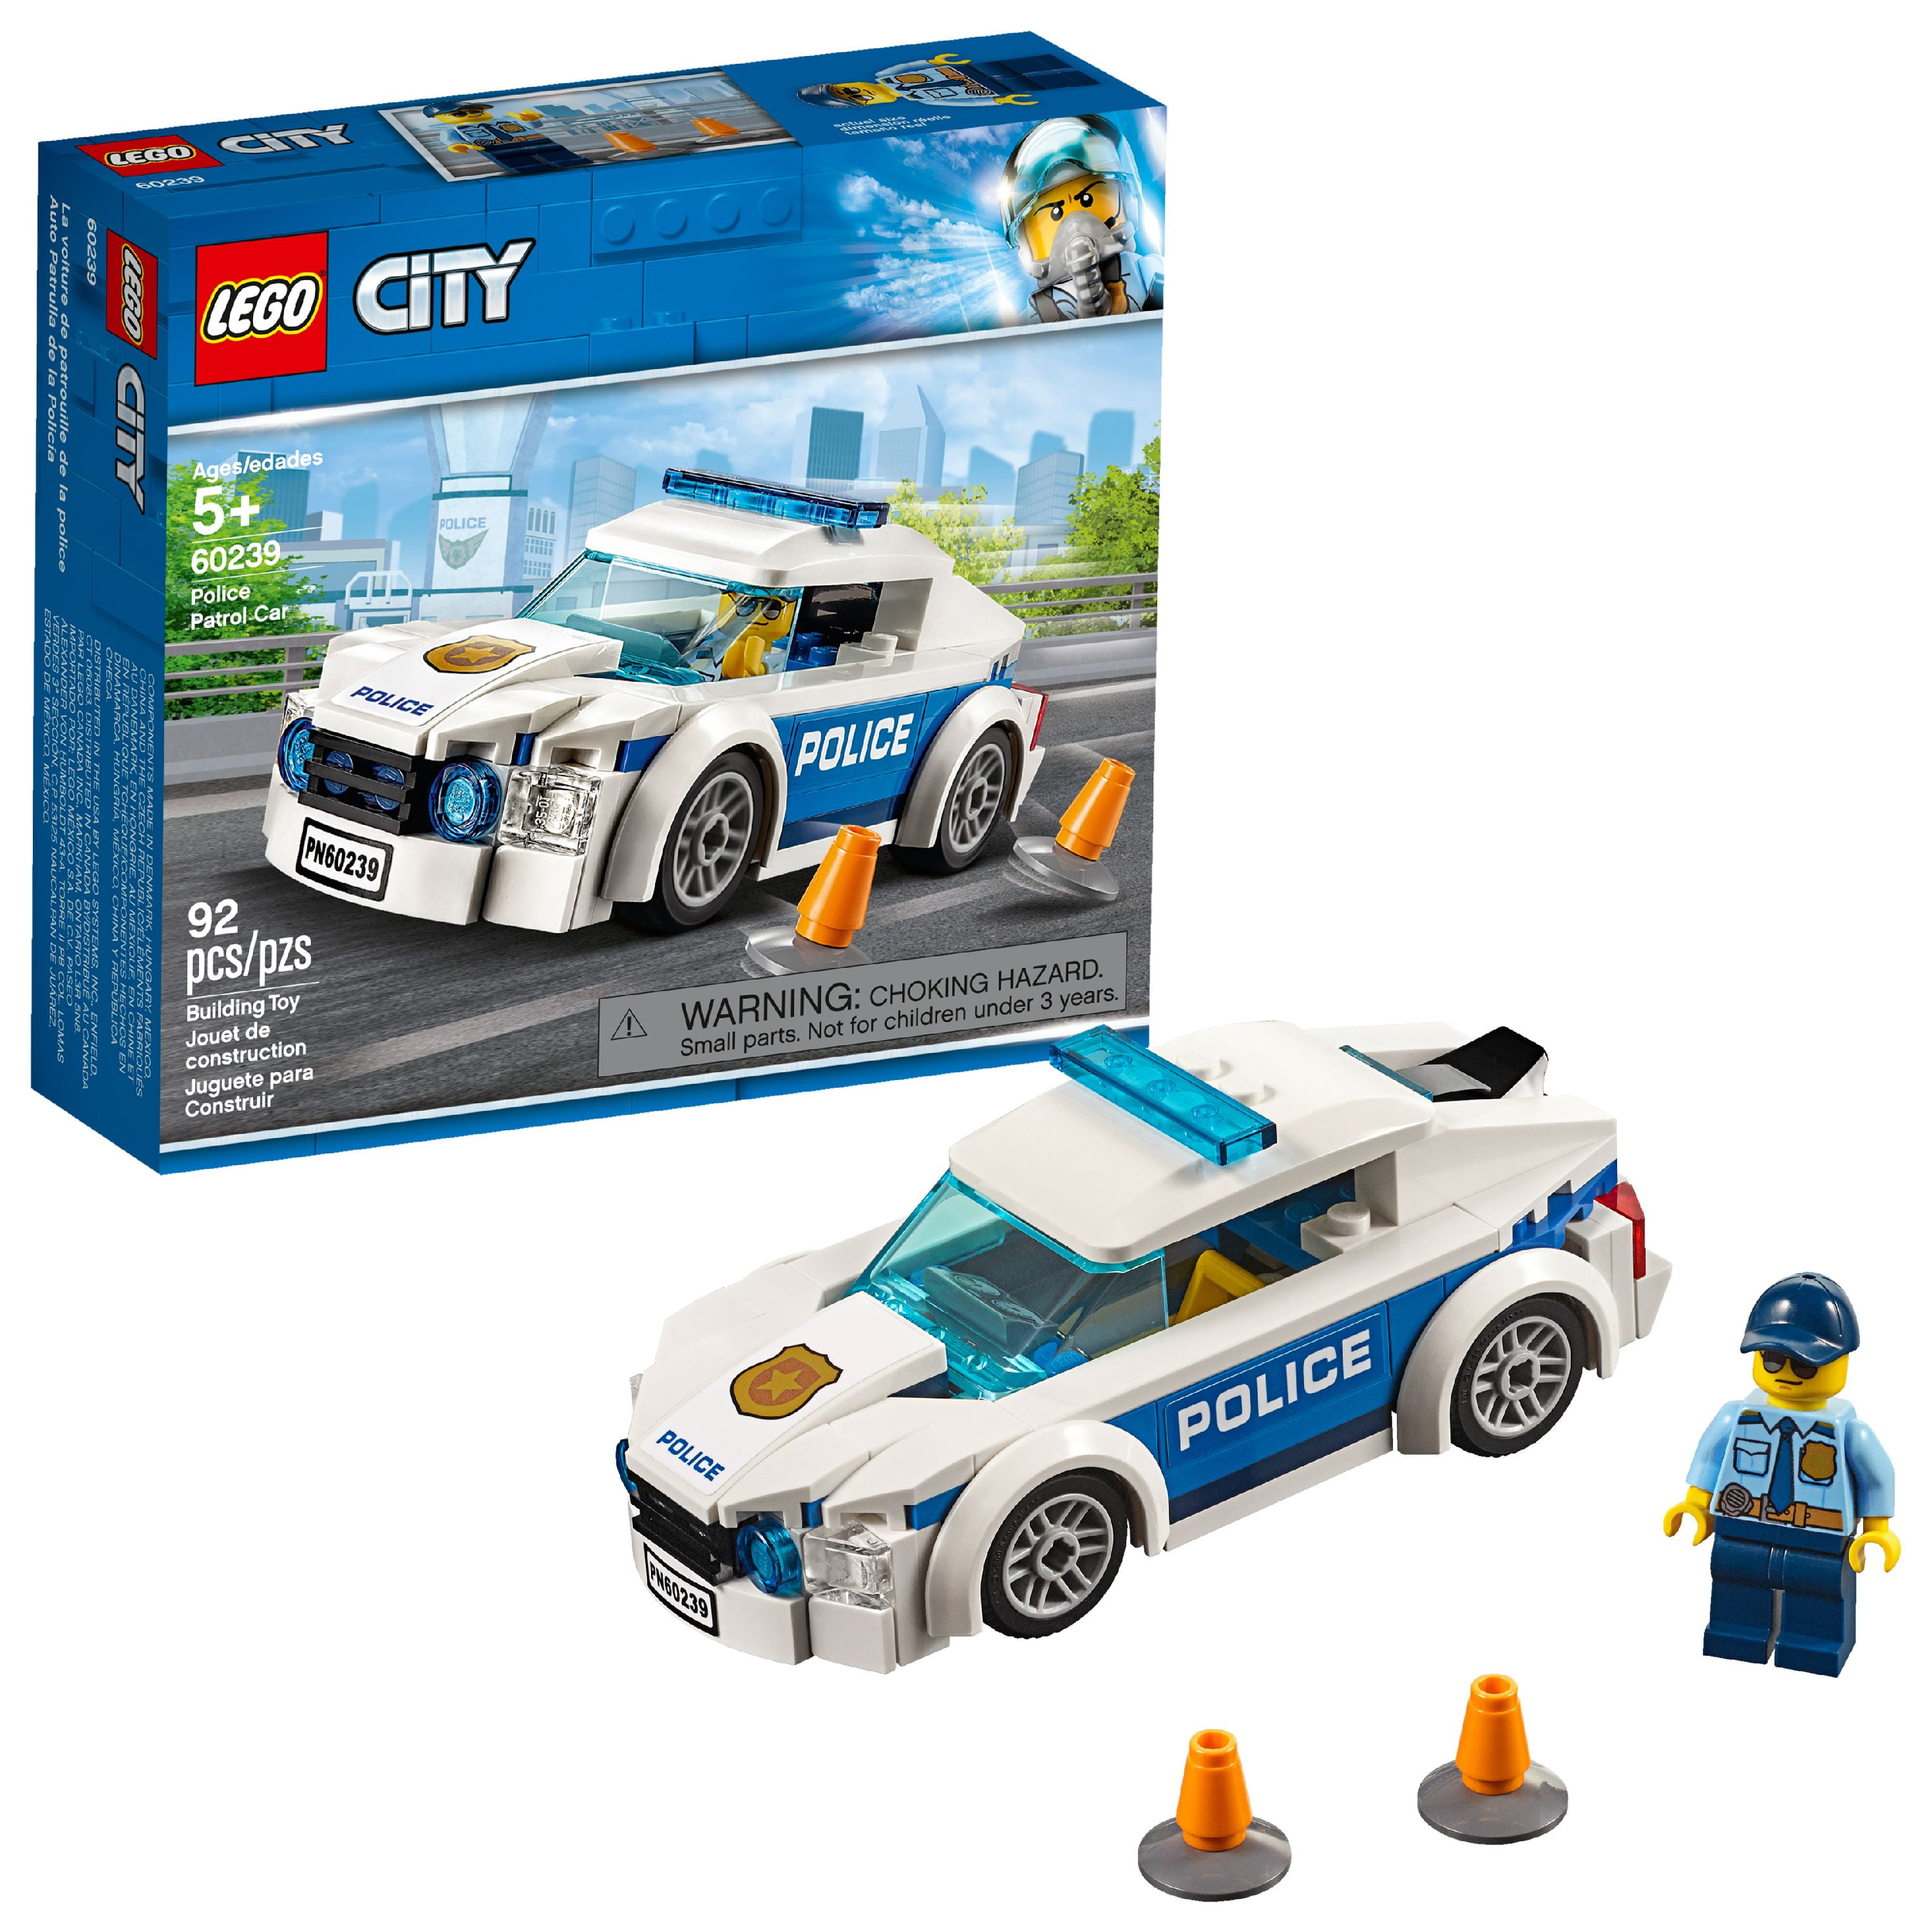 LEGO Police Dog Unit City Police for sale online 60241 